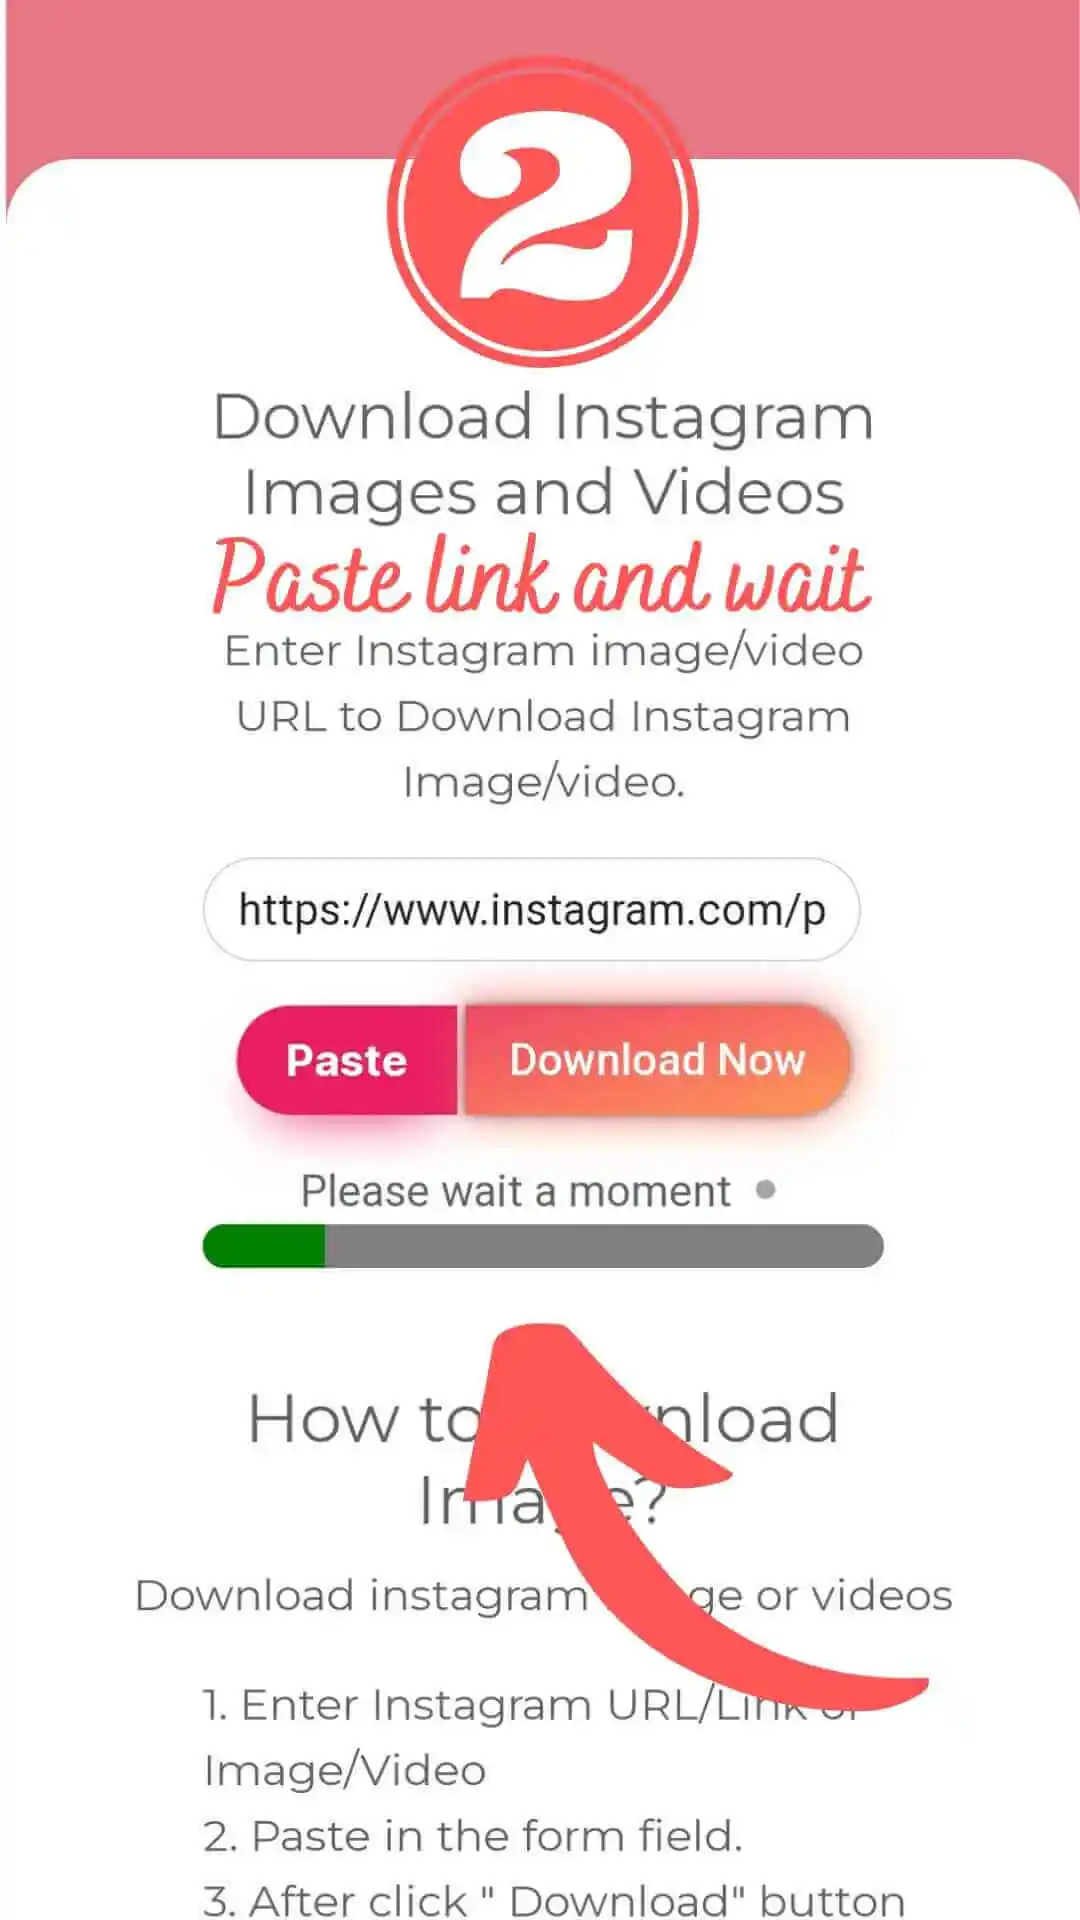 Step 2 to Download instagram video - paste link